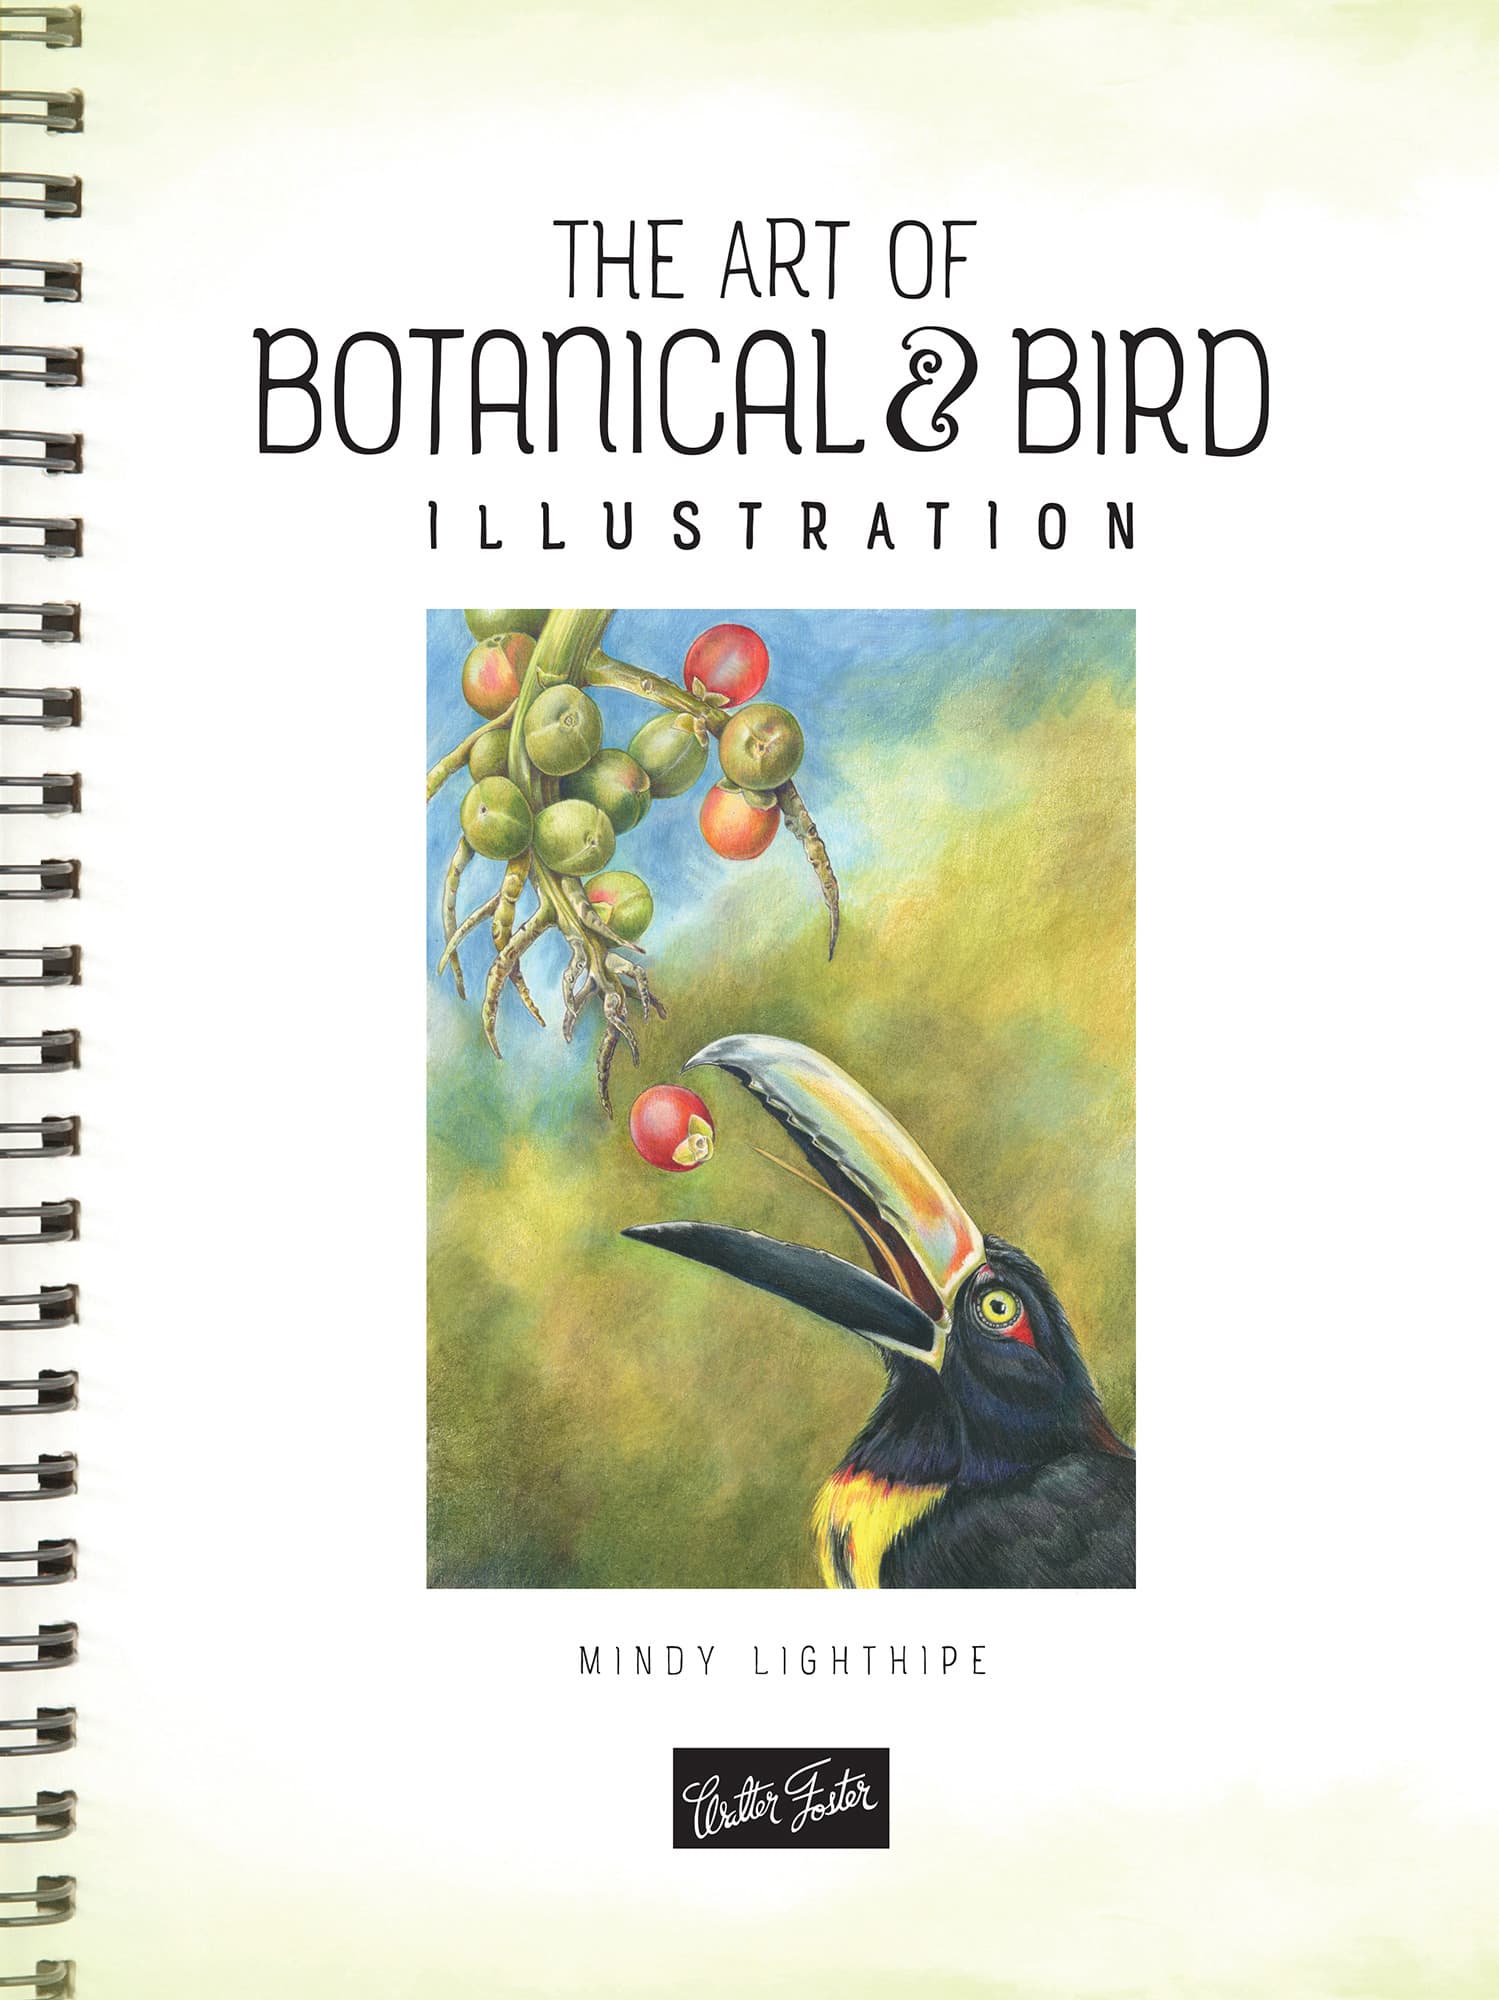 The Art of Botanical & Bird: Illustration